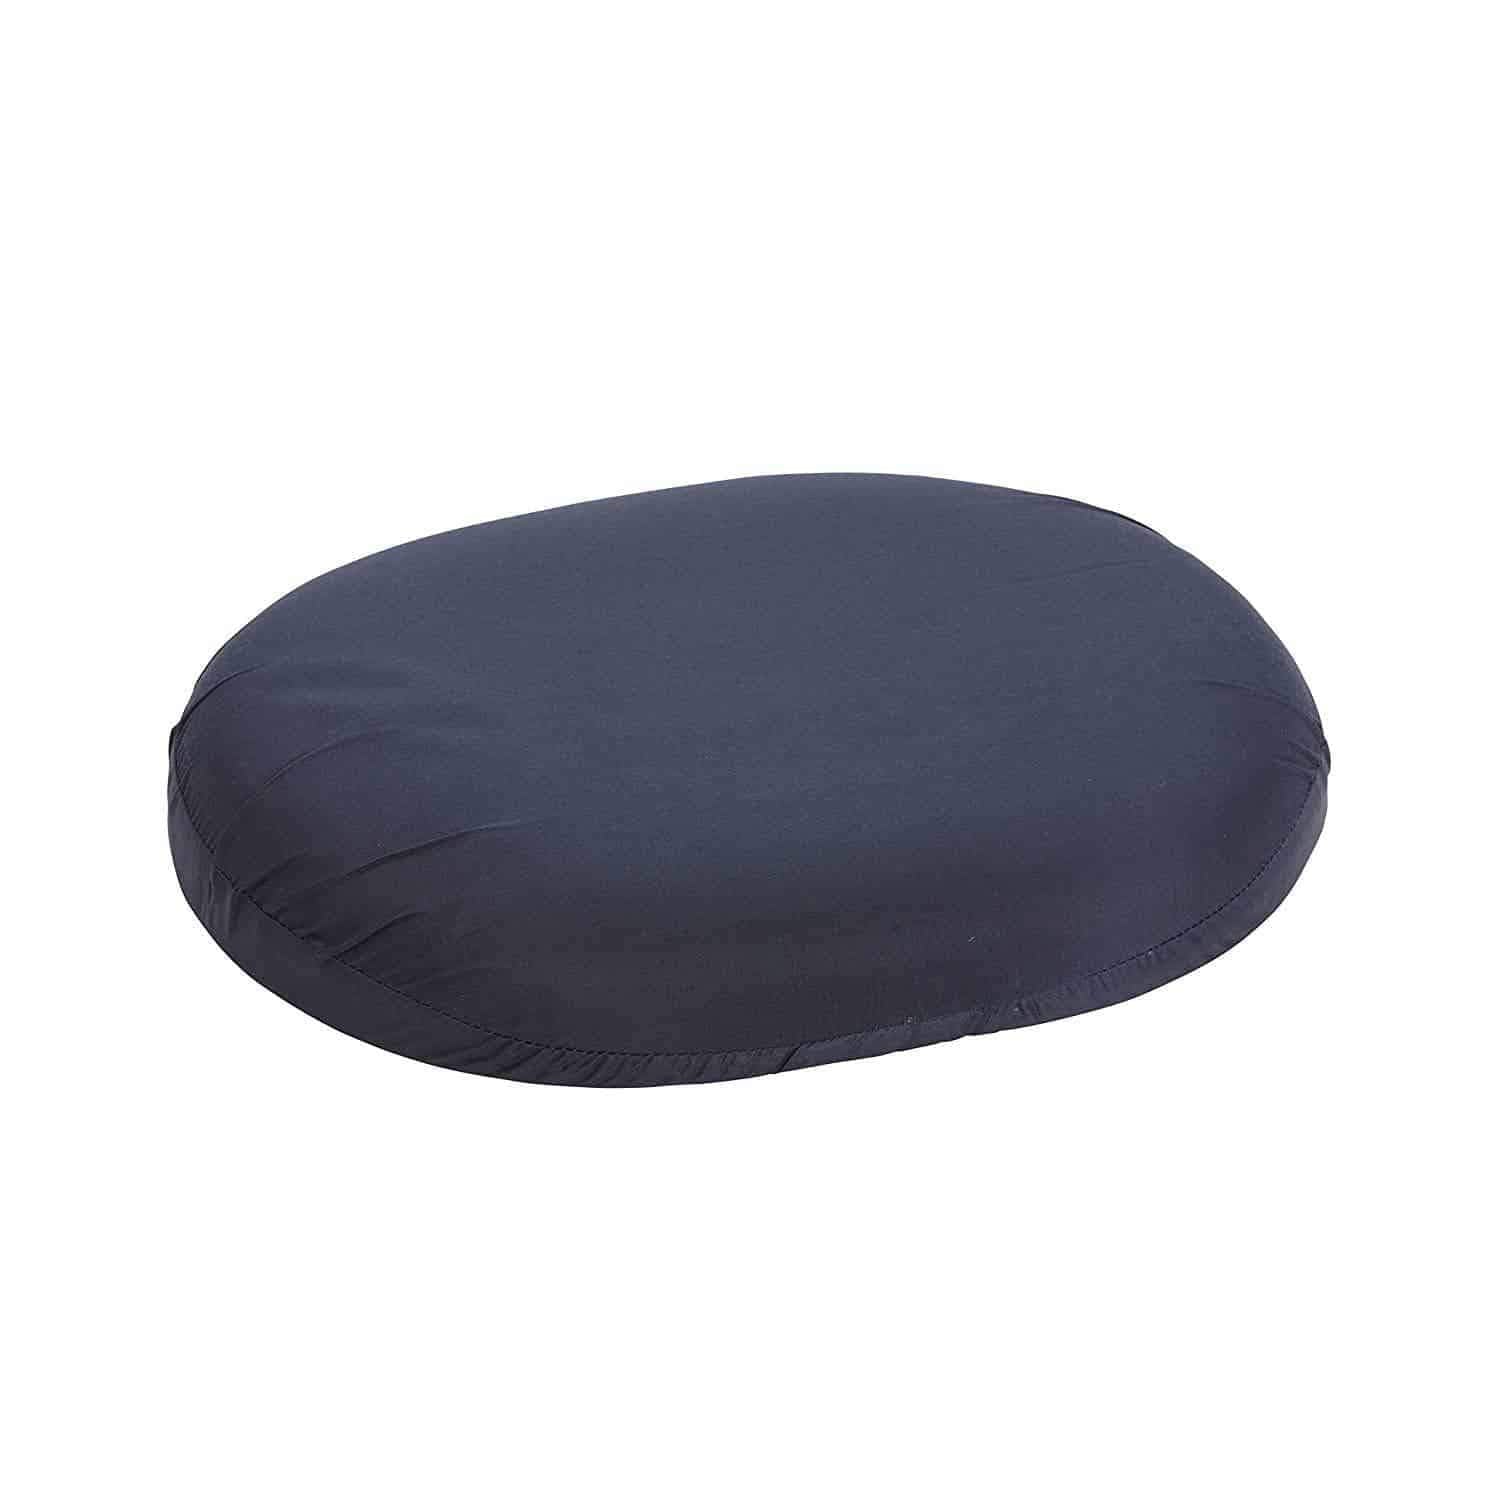 DMI Seat Cushion Donut Pillow and Chair Pillow for Tailbone Pain